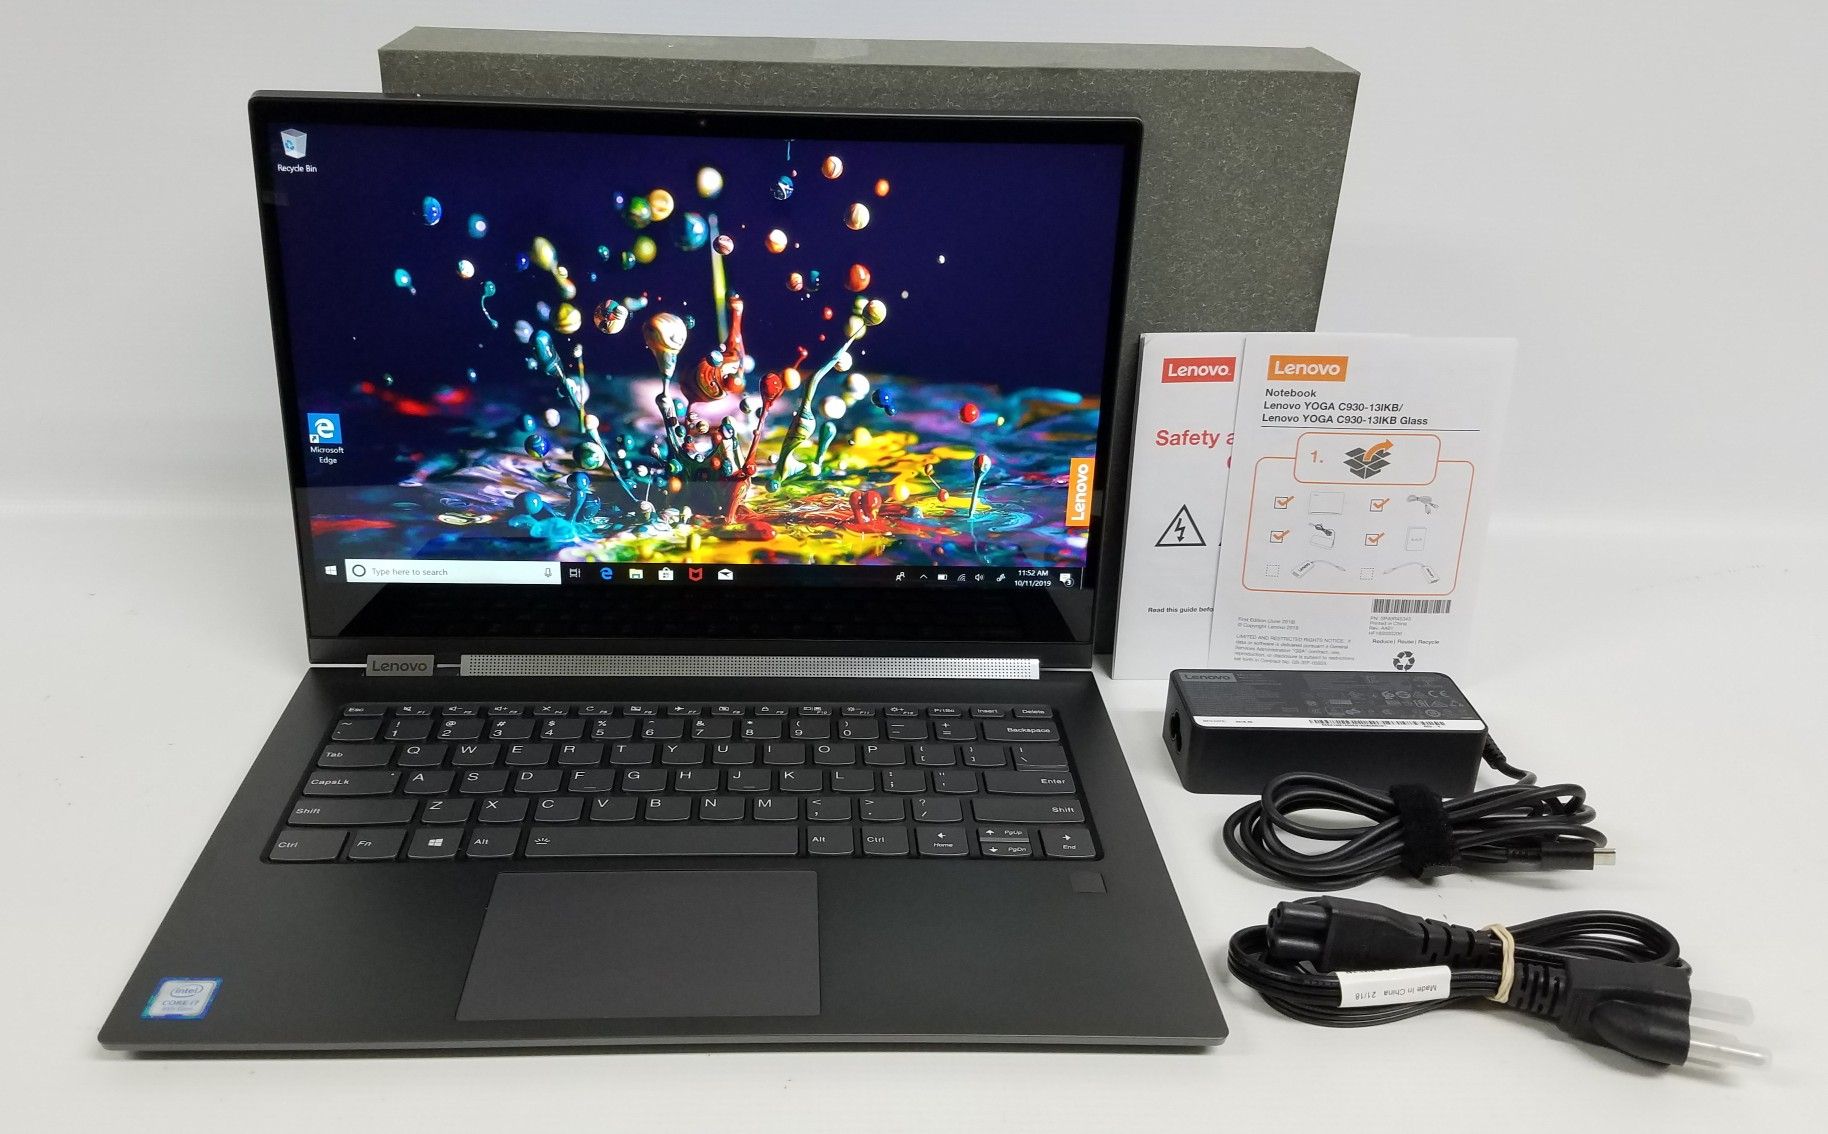 NEW Lenovo Yoga C930-13IKB 2-in-1 Touchscreen Laptop (256GB SSD, Intel i7 @1.8GHz, 12GB RAM)